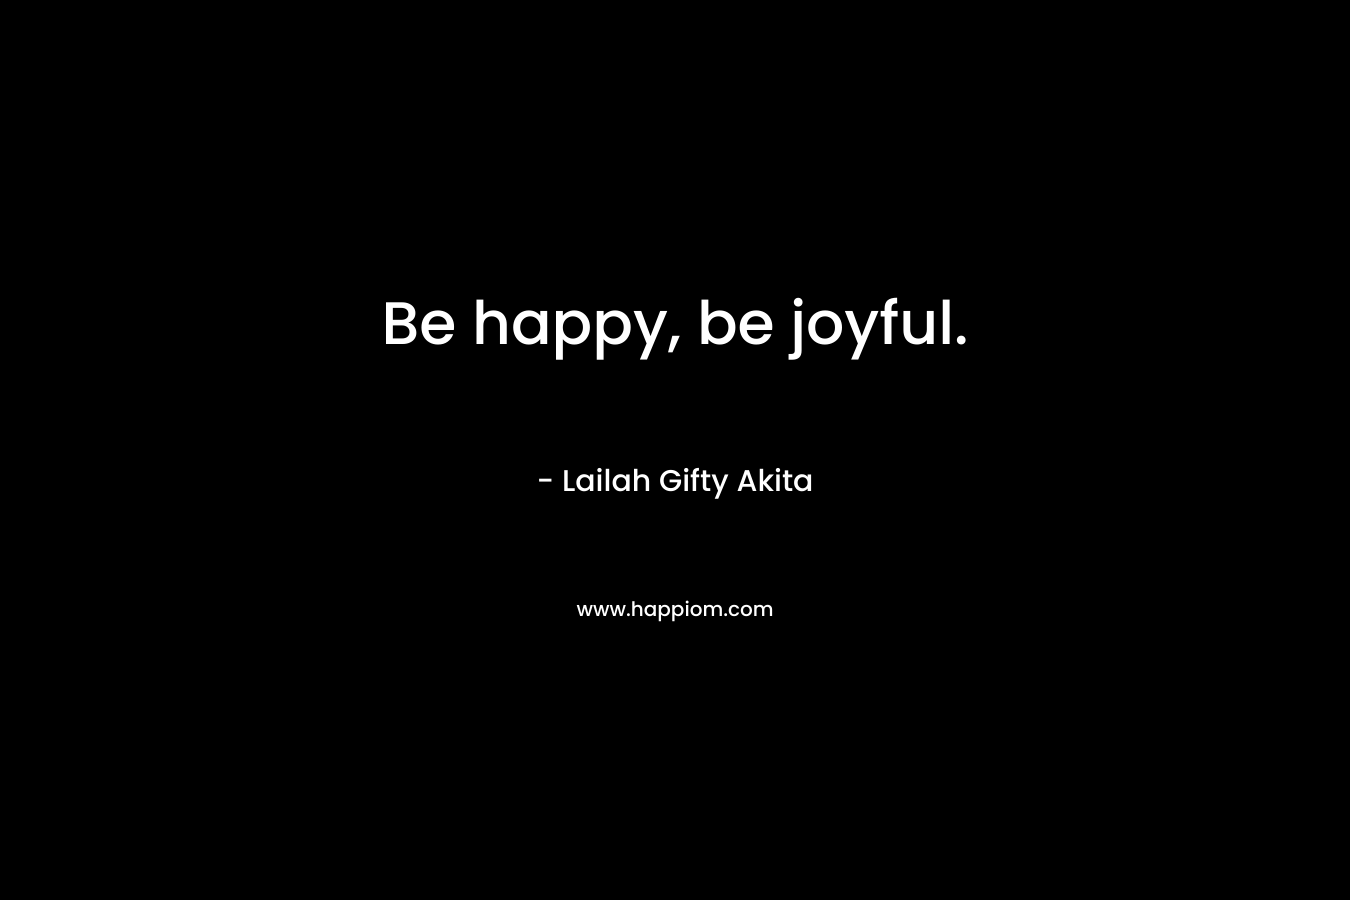 Be happy, be joyful.